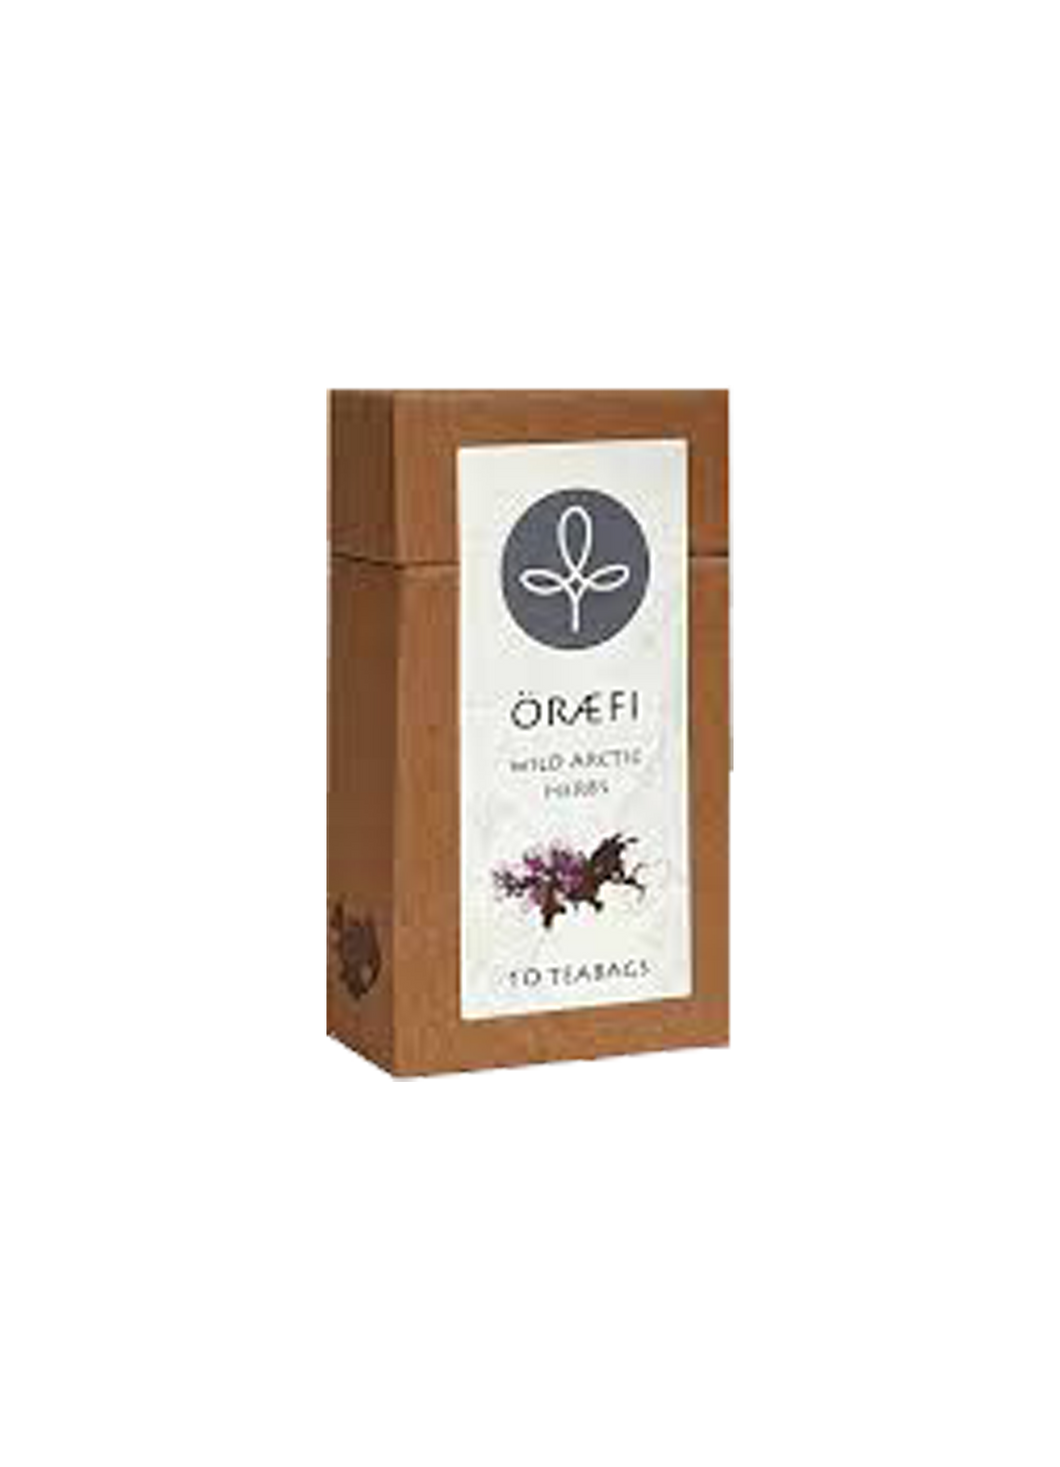 Oraefi Wild Arctic Herbs 10 tea bags